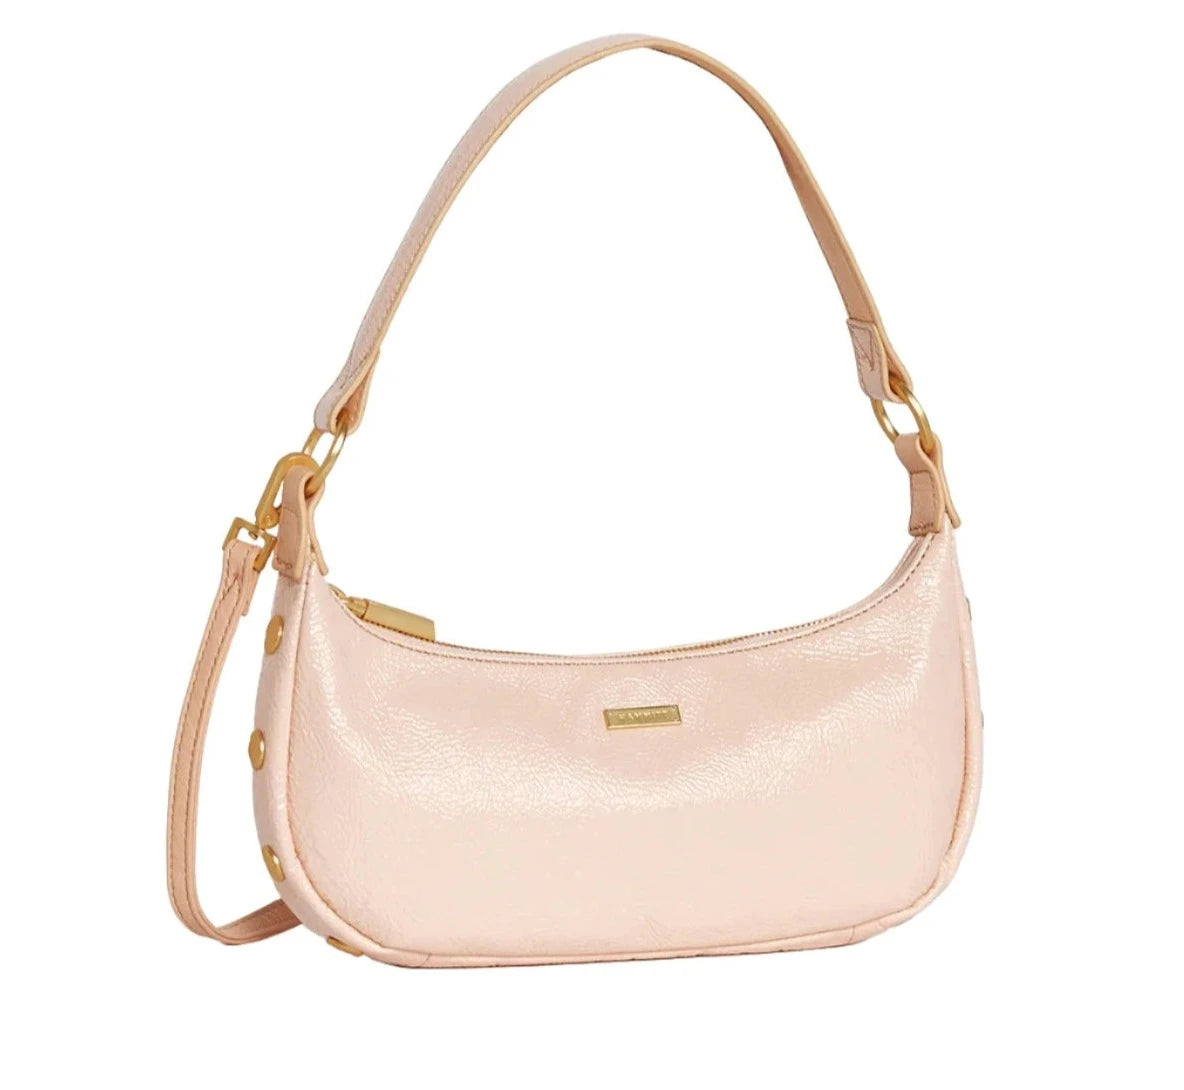 BECKER SML Handbag in Champagne Pink/ Gold